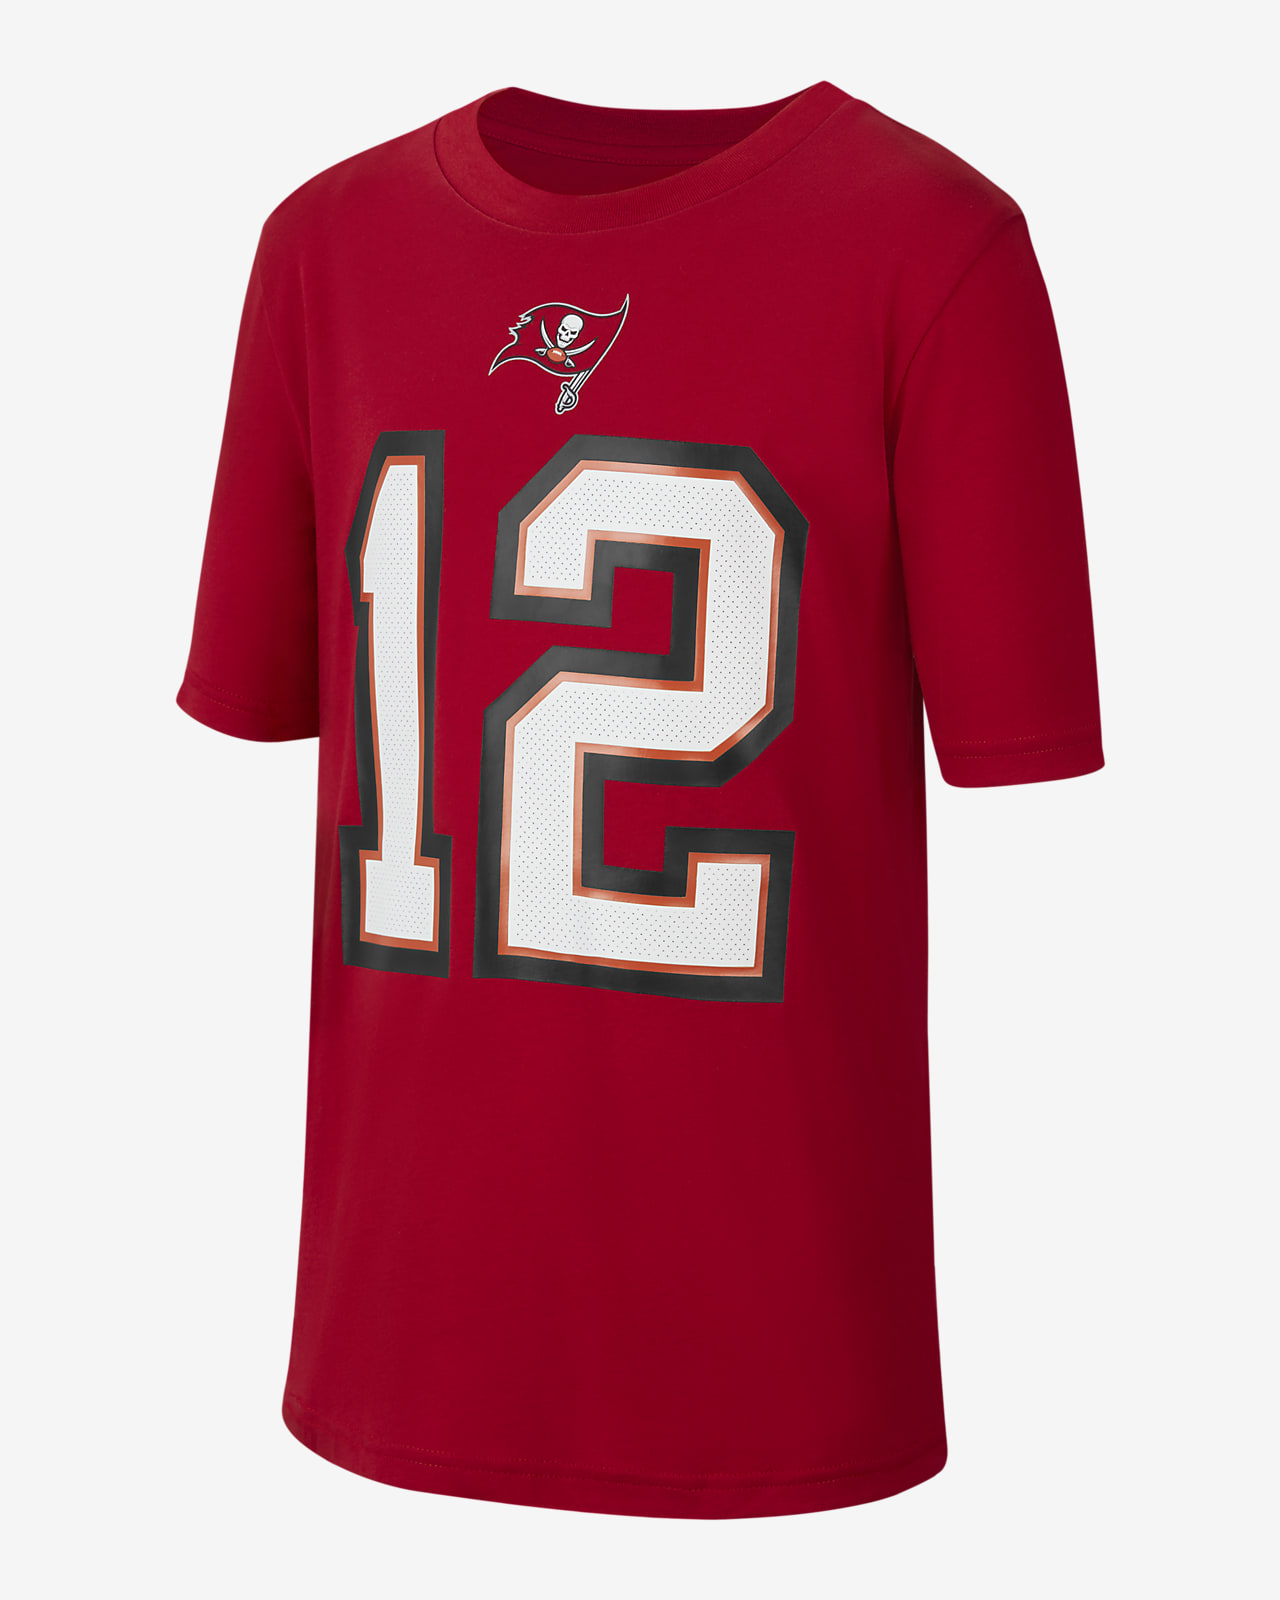 T-shirt Nike (NFL Tampa Bay Buccaneers) – Ragazzo/a